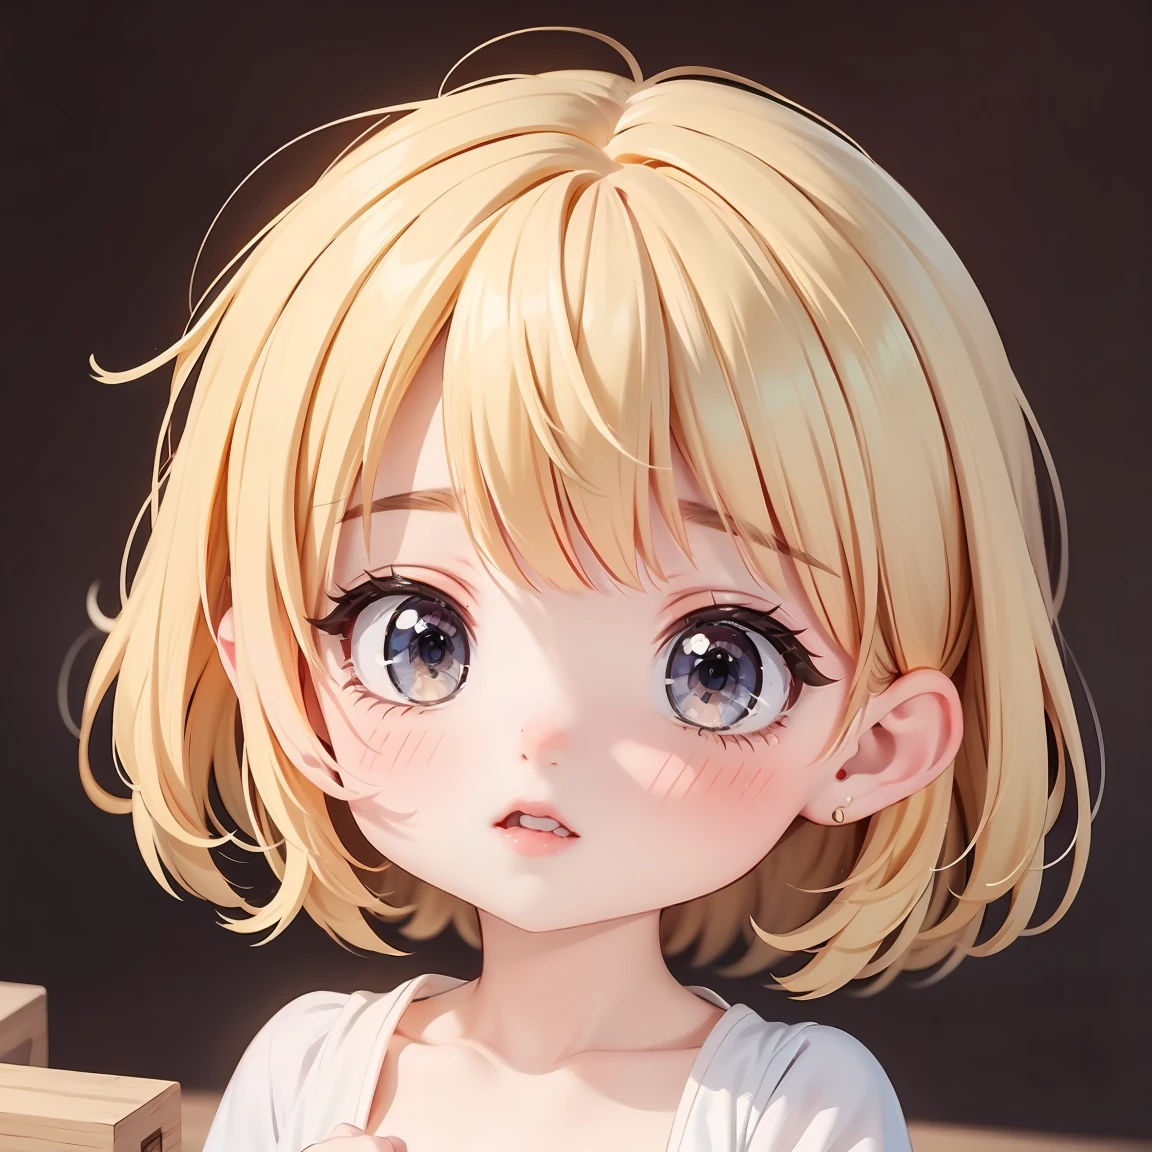  Chibi Character：1.5、Blonde Hair、Cute 7 year old girl